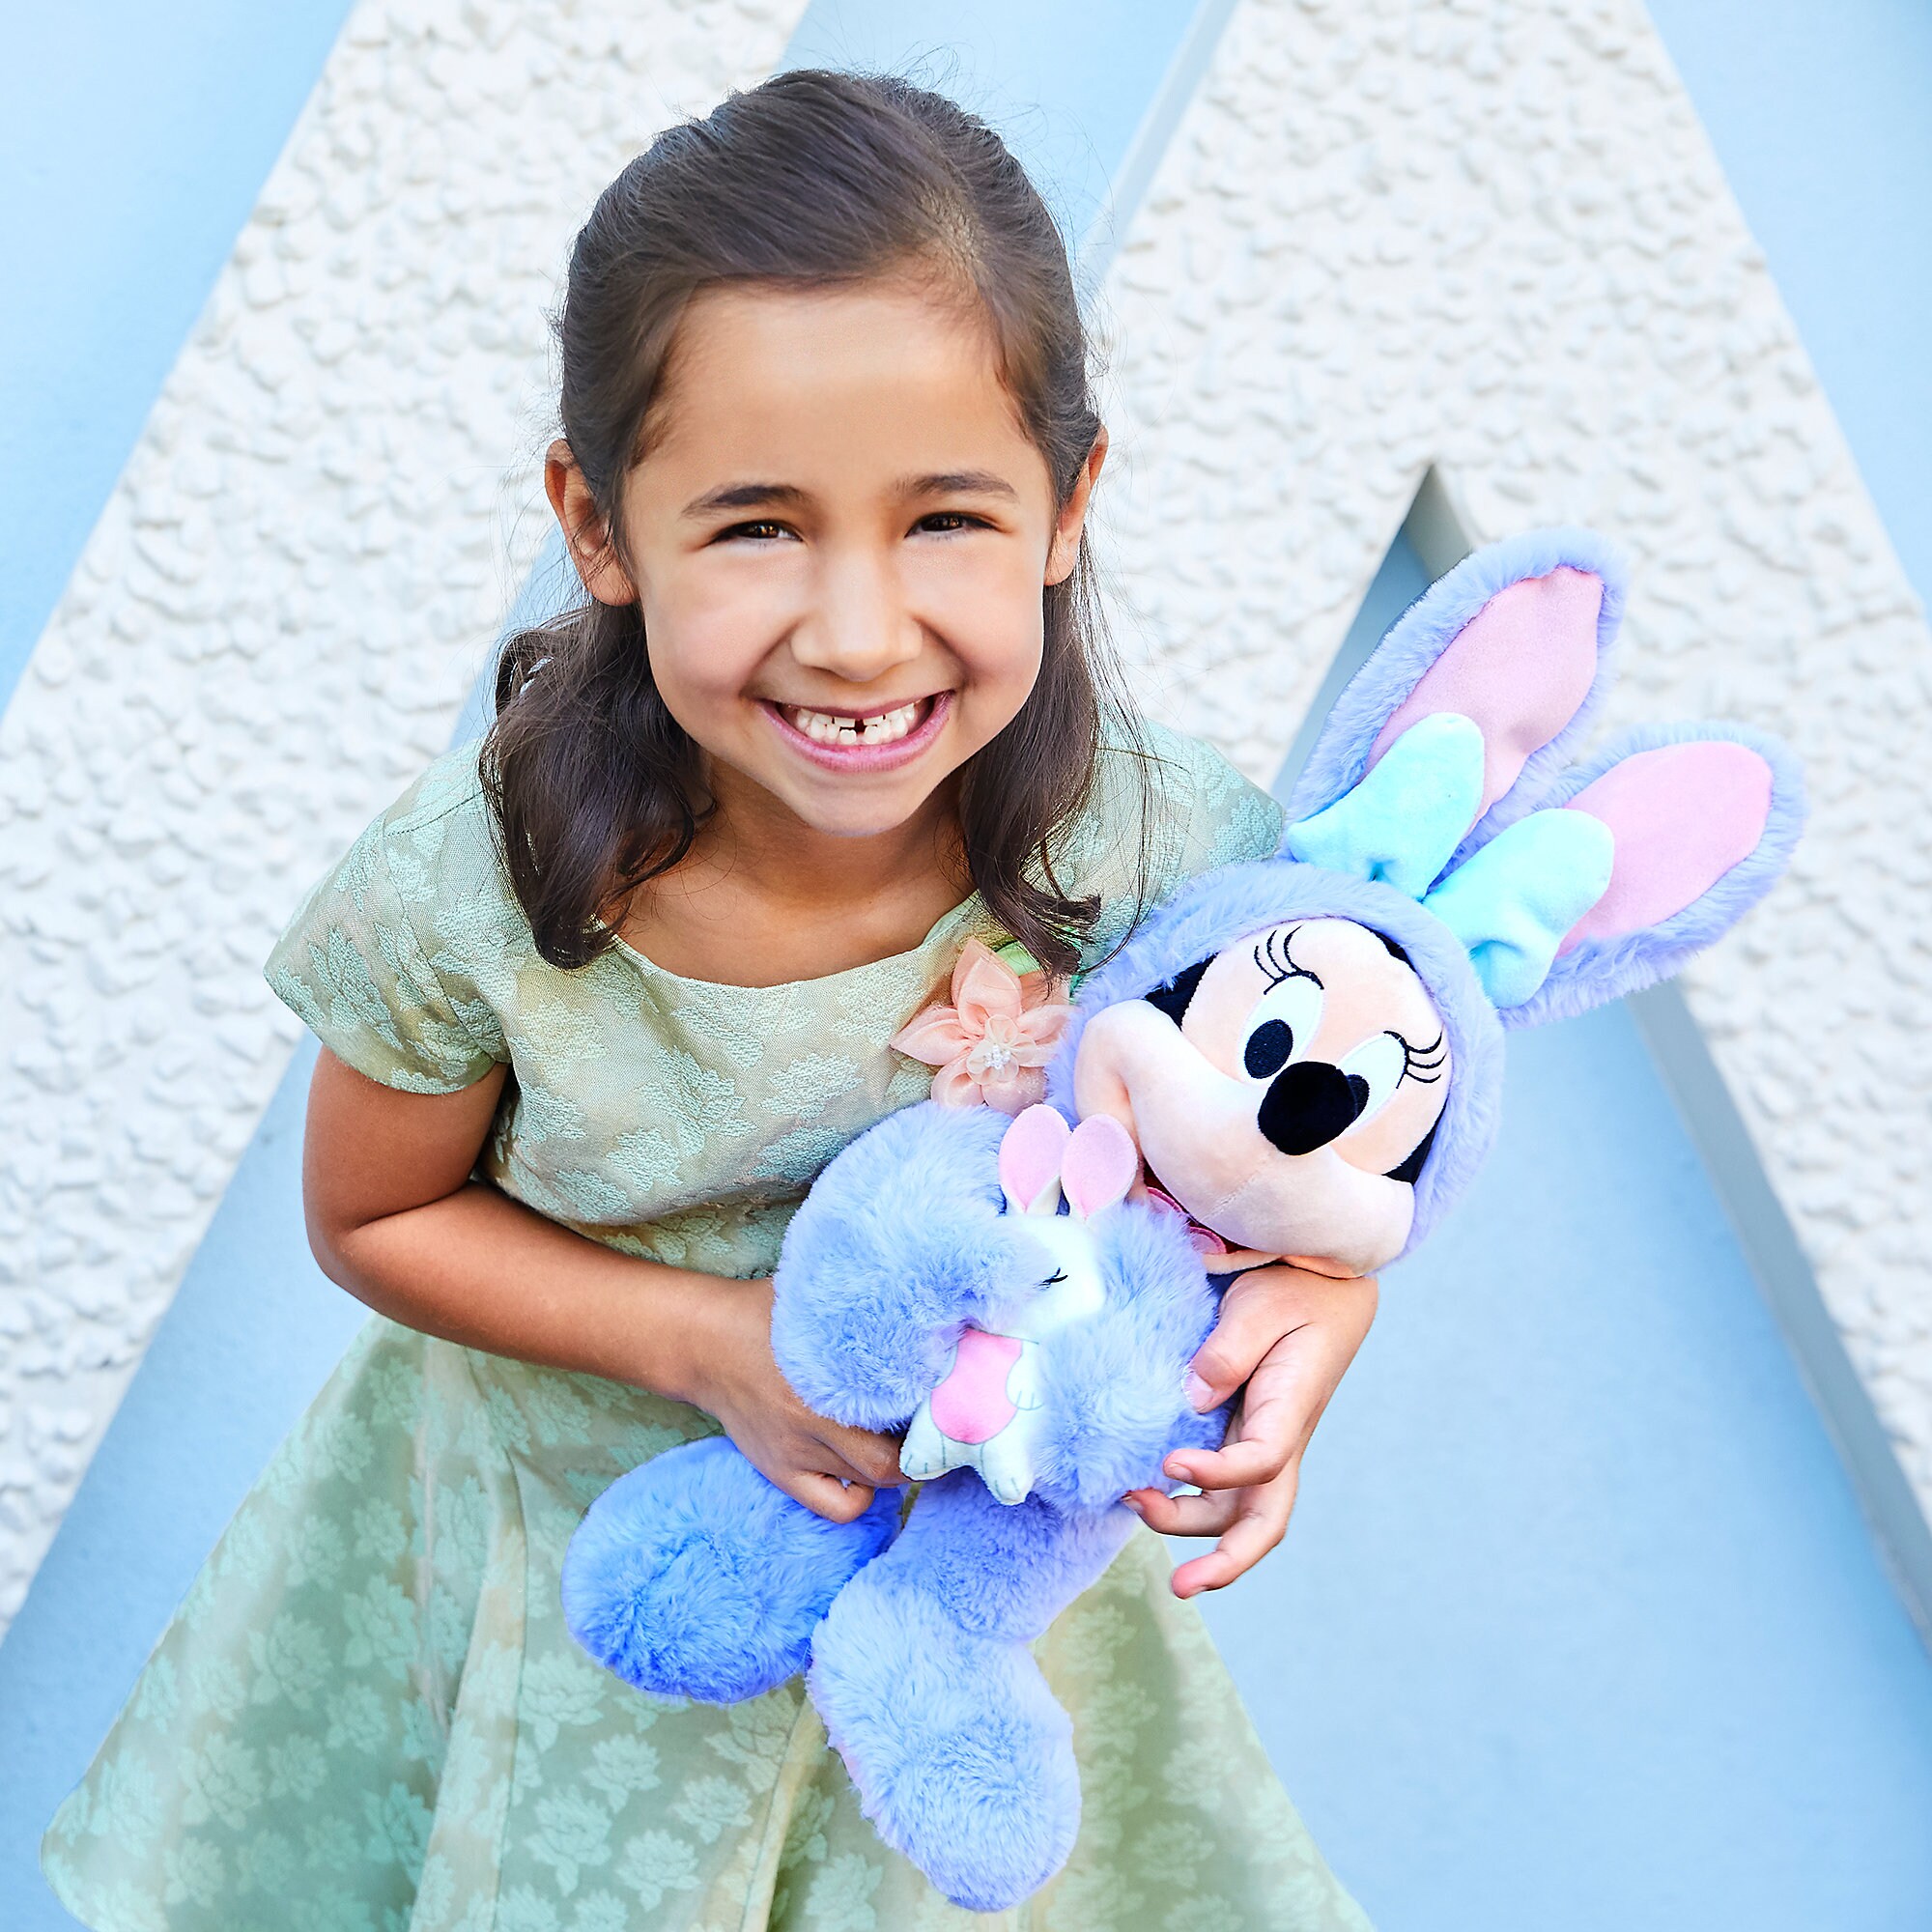 Minnie Mouse Plush Bunny 2019 - Medium - 18'' - Personalized